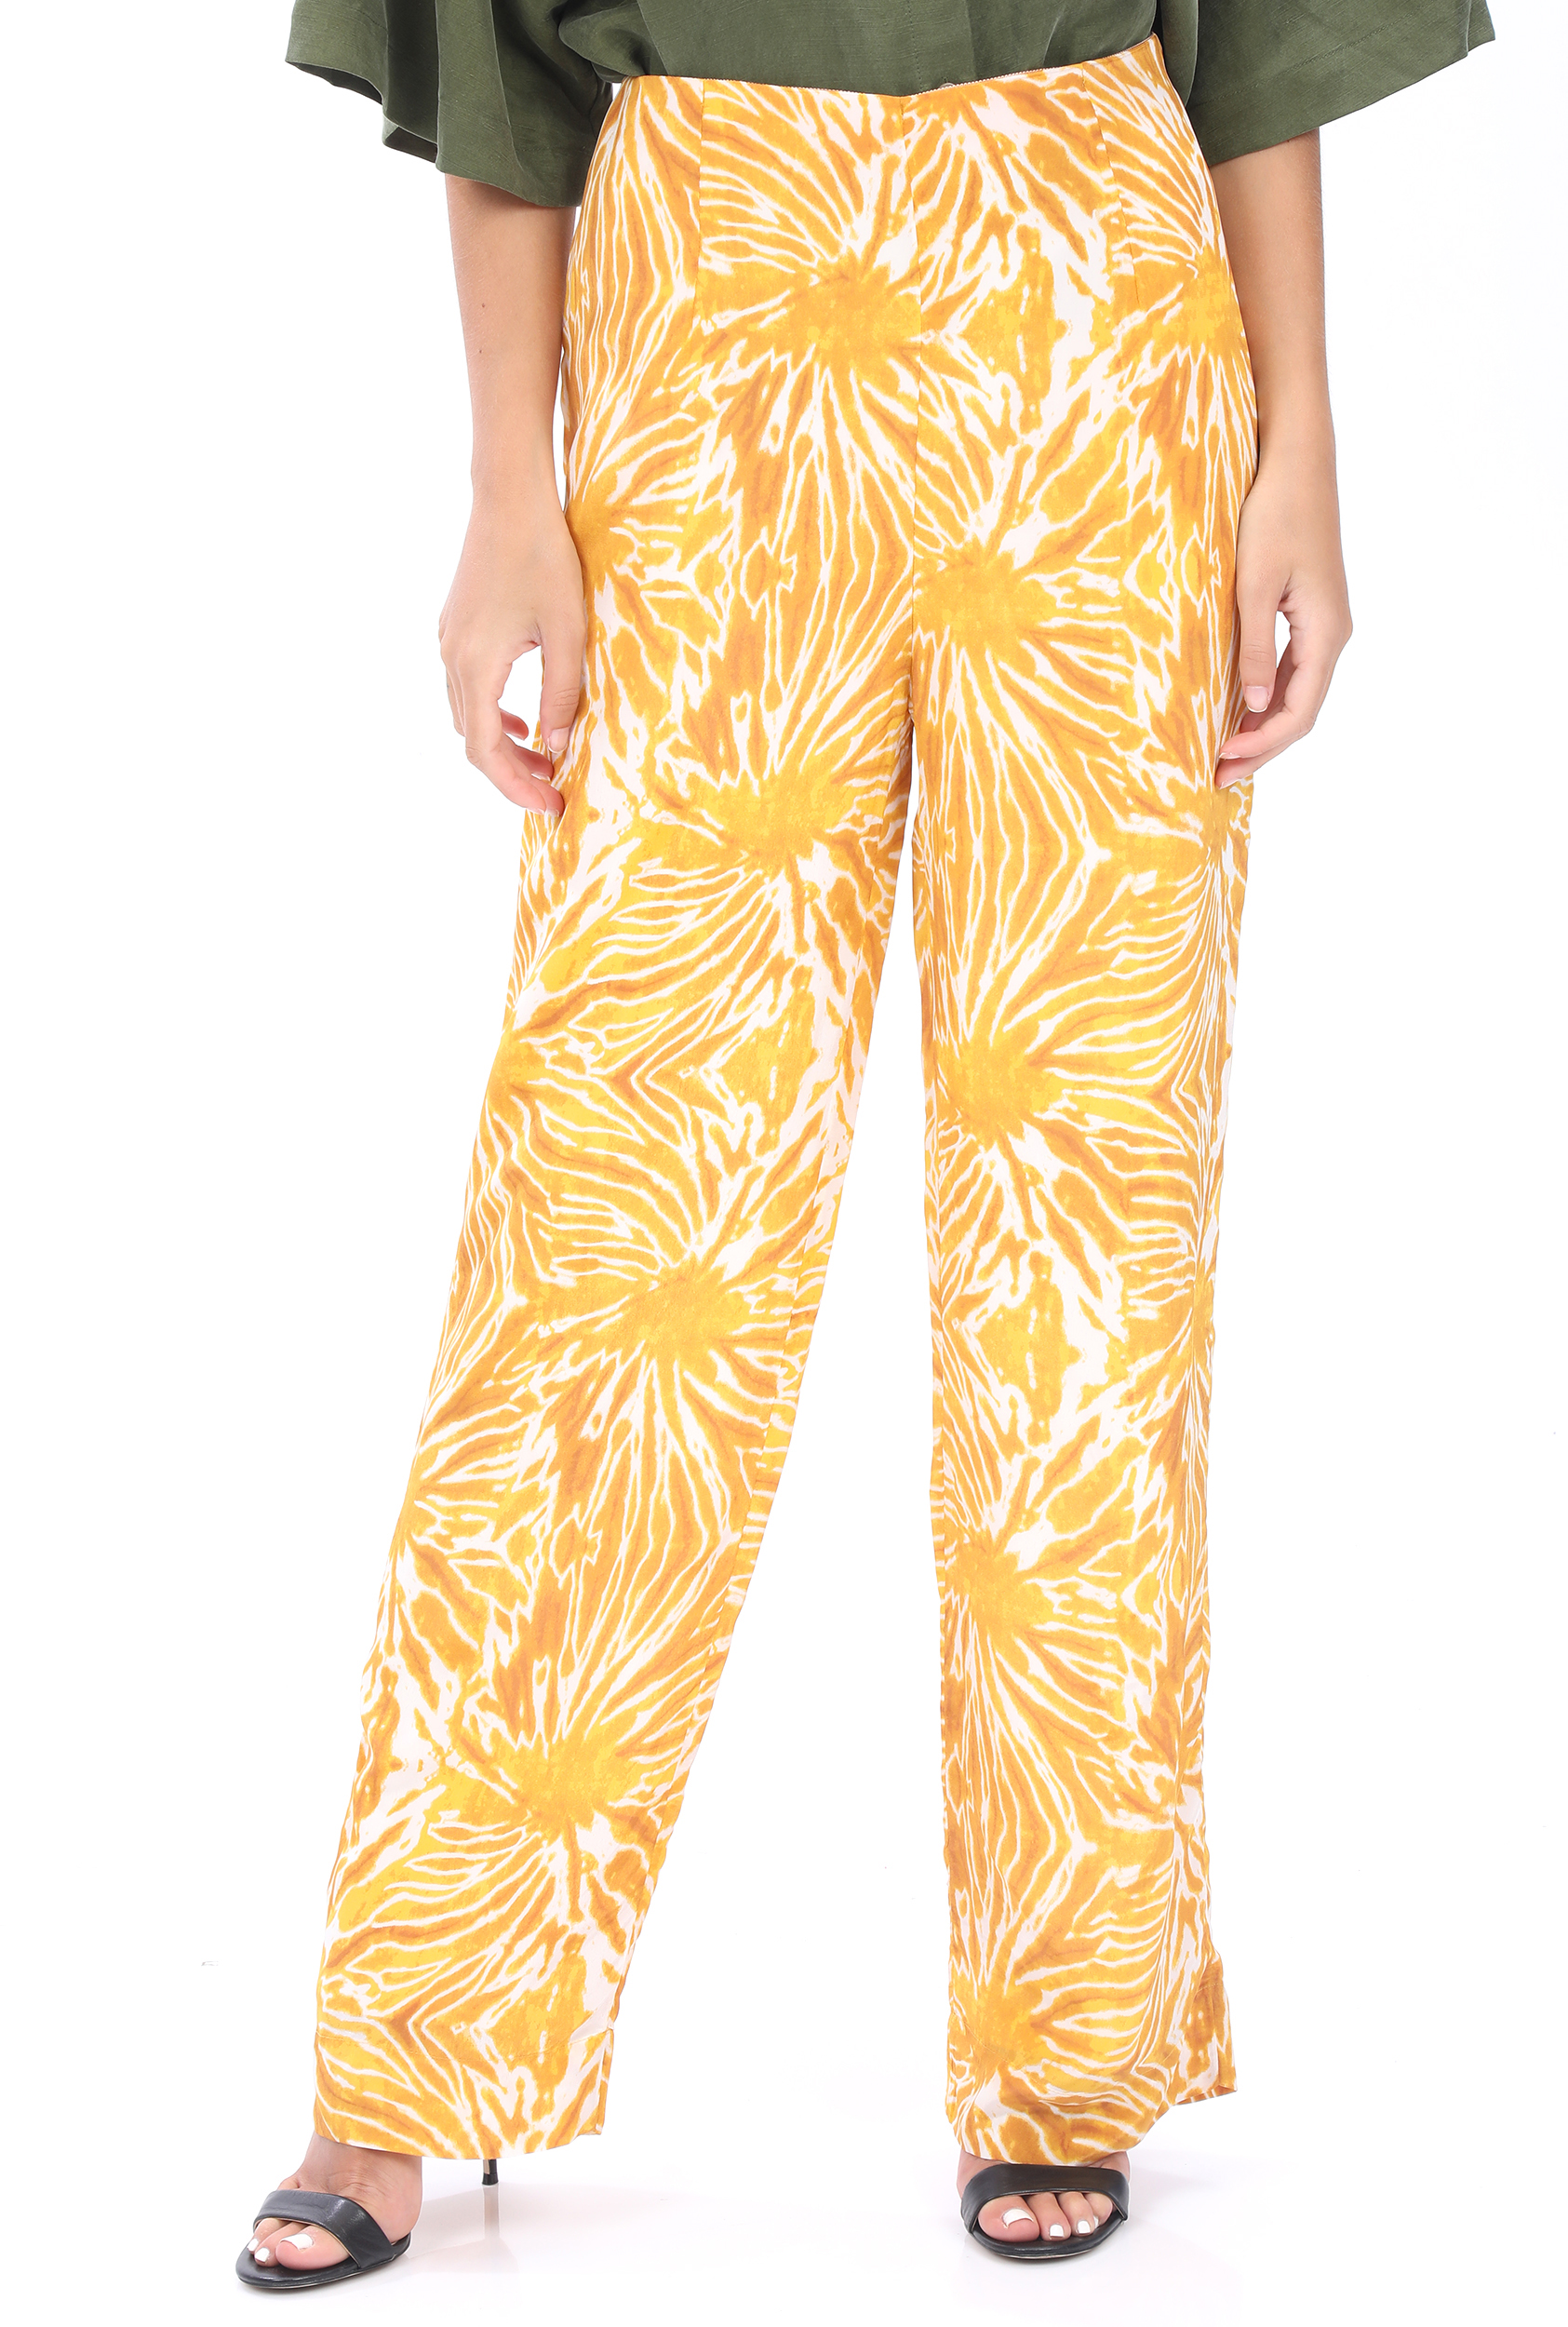 SCOTCH & SODA – Γυναικεια παντελονα SCOTCH & SODA Printed tie-dye wide leg κιτρινη εκρου